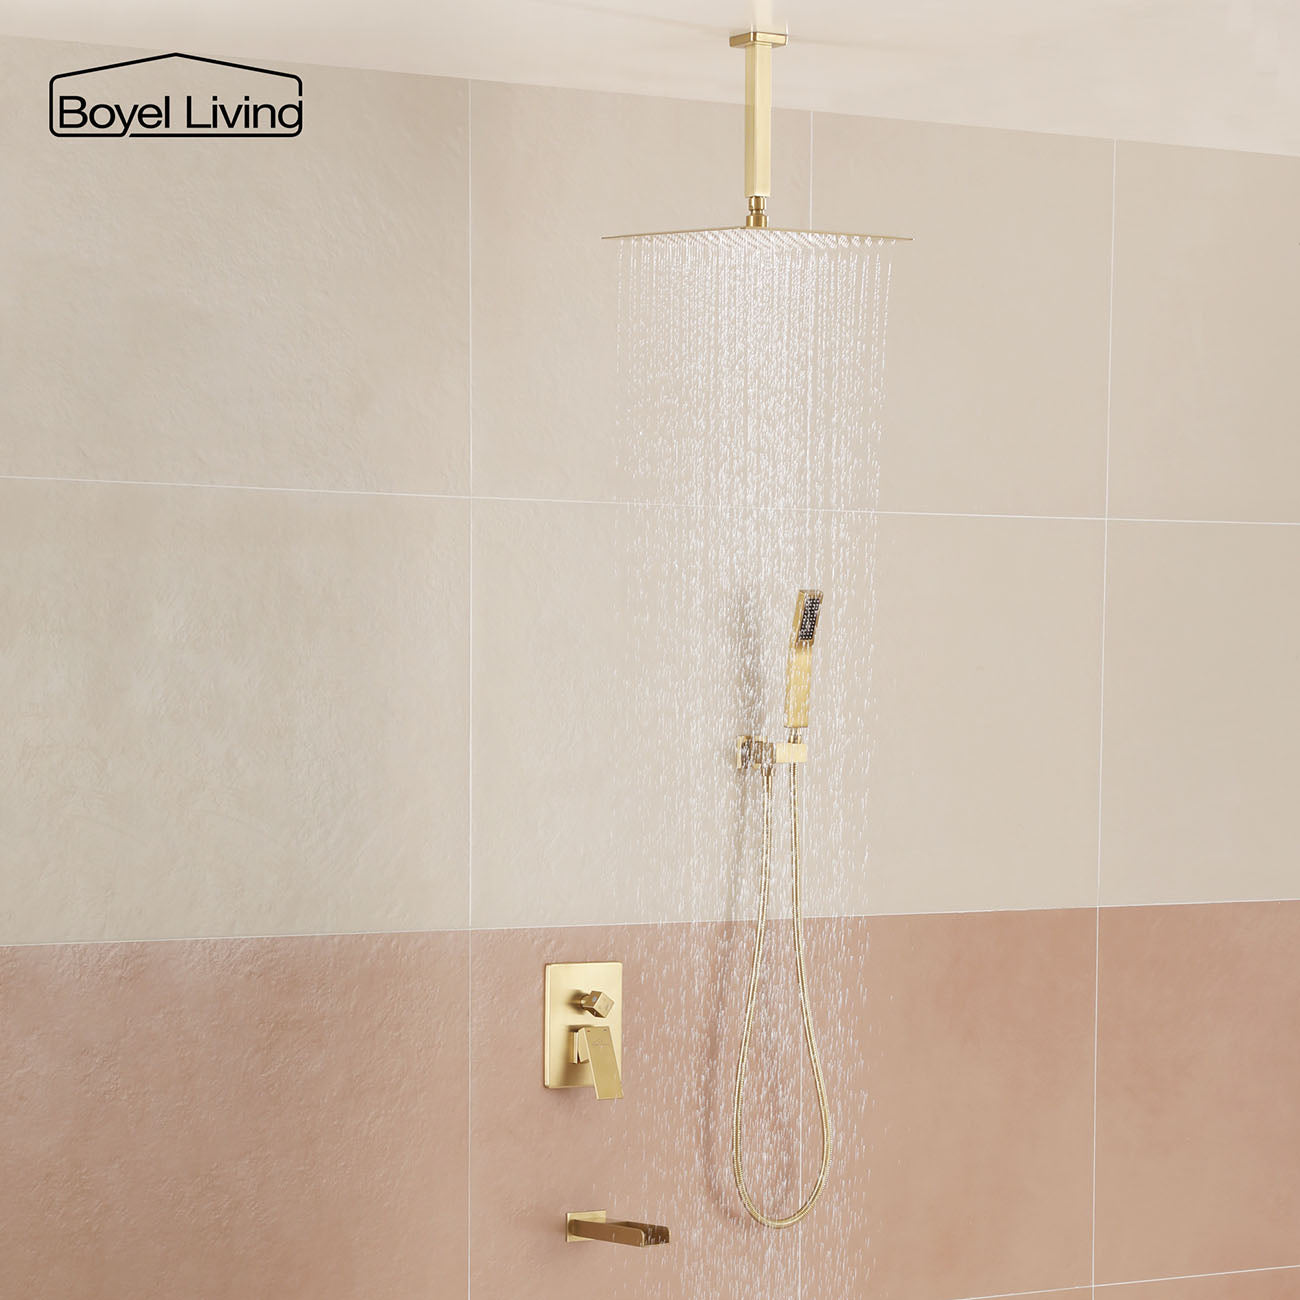 Boyel Living Shower System